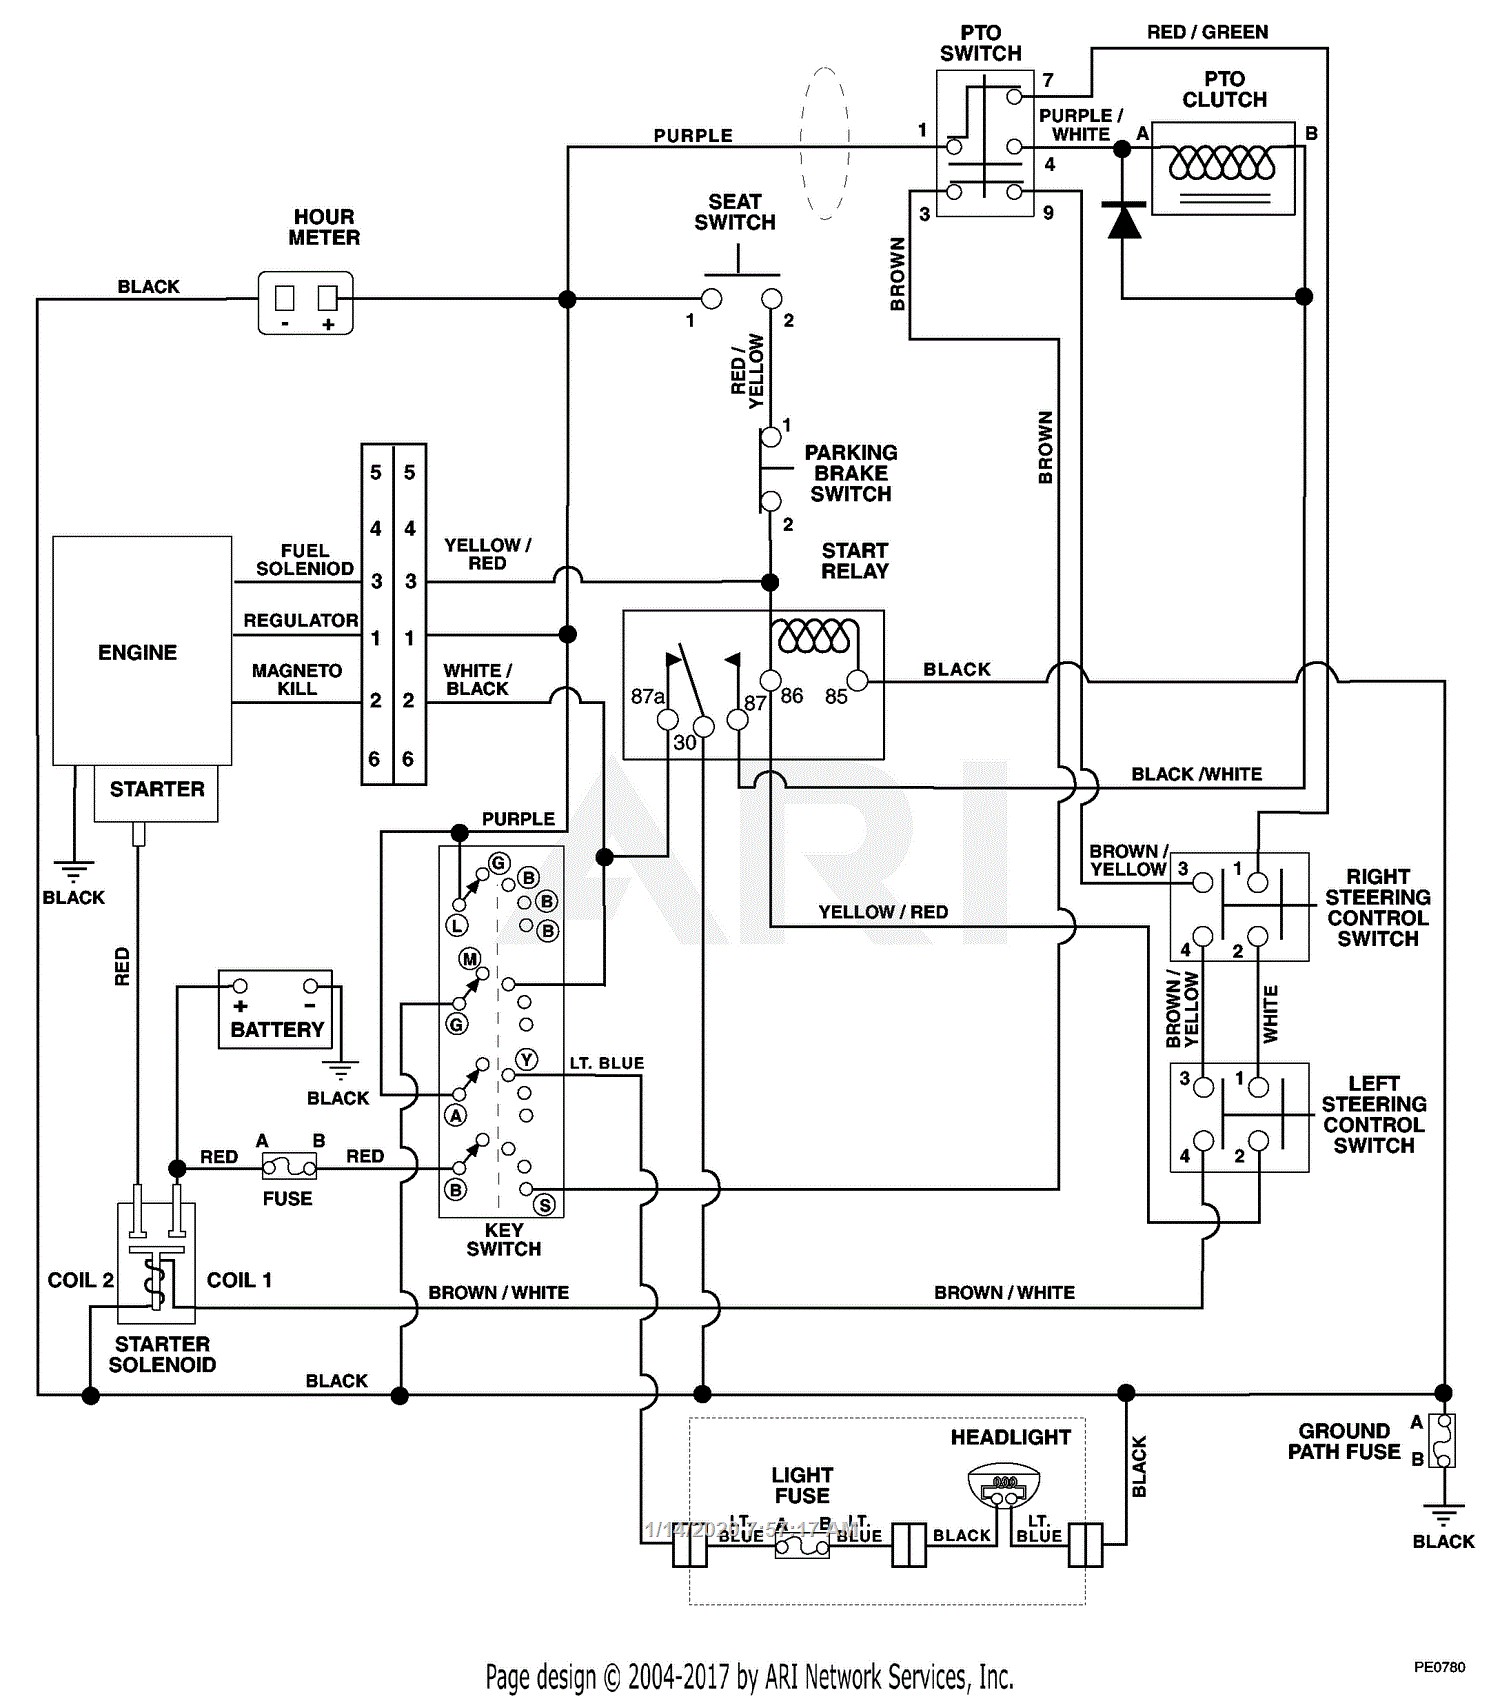 Steelmate Car Alarm Wiring Diagram Security Systems Wiring Diagram Of Steelmate Car Alarm Wiring Diagram